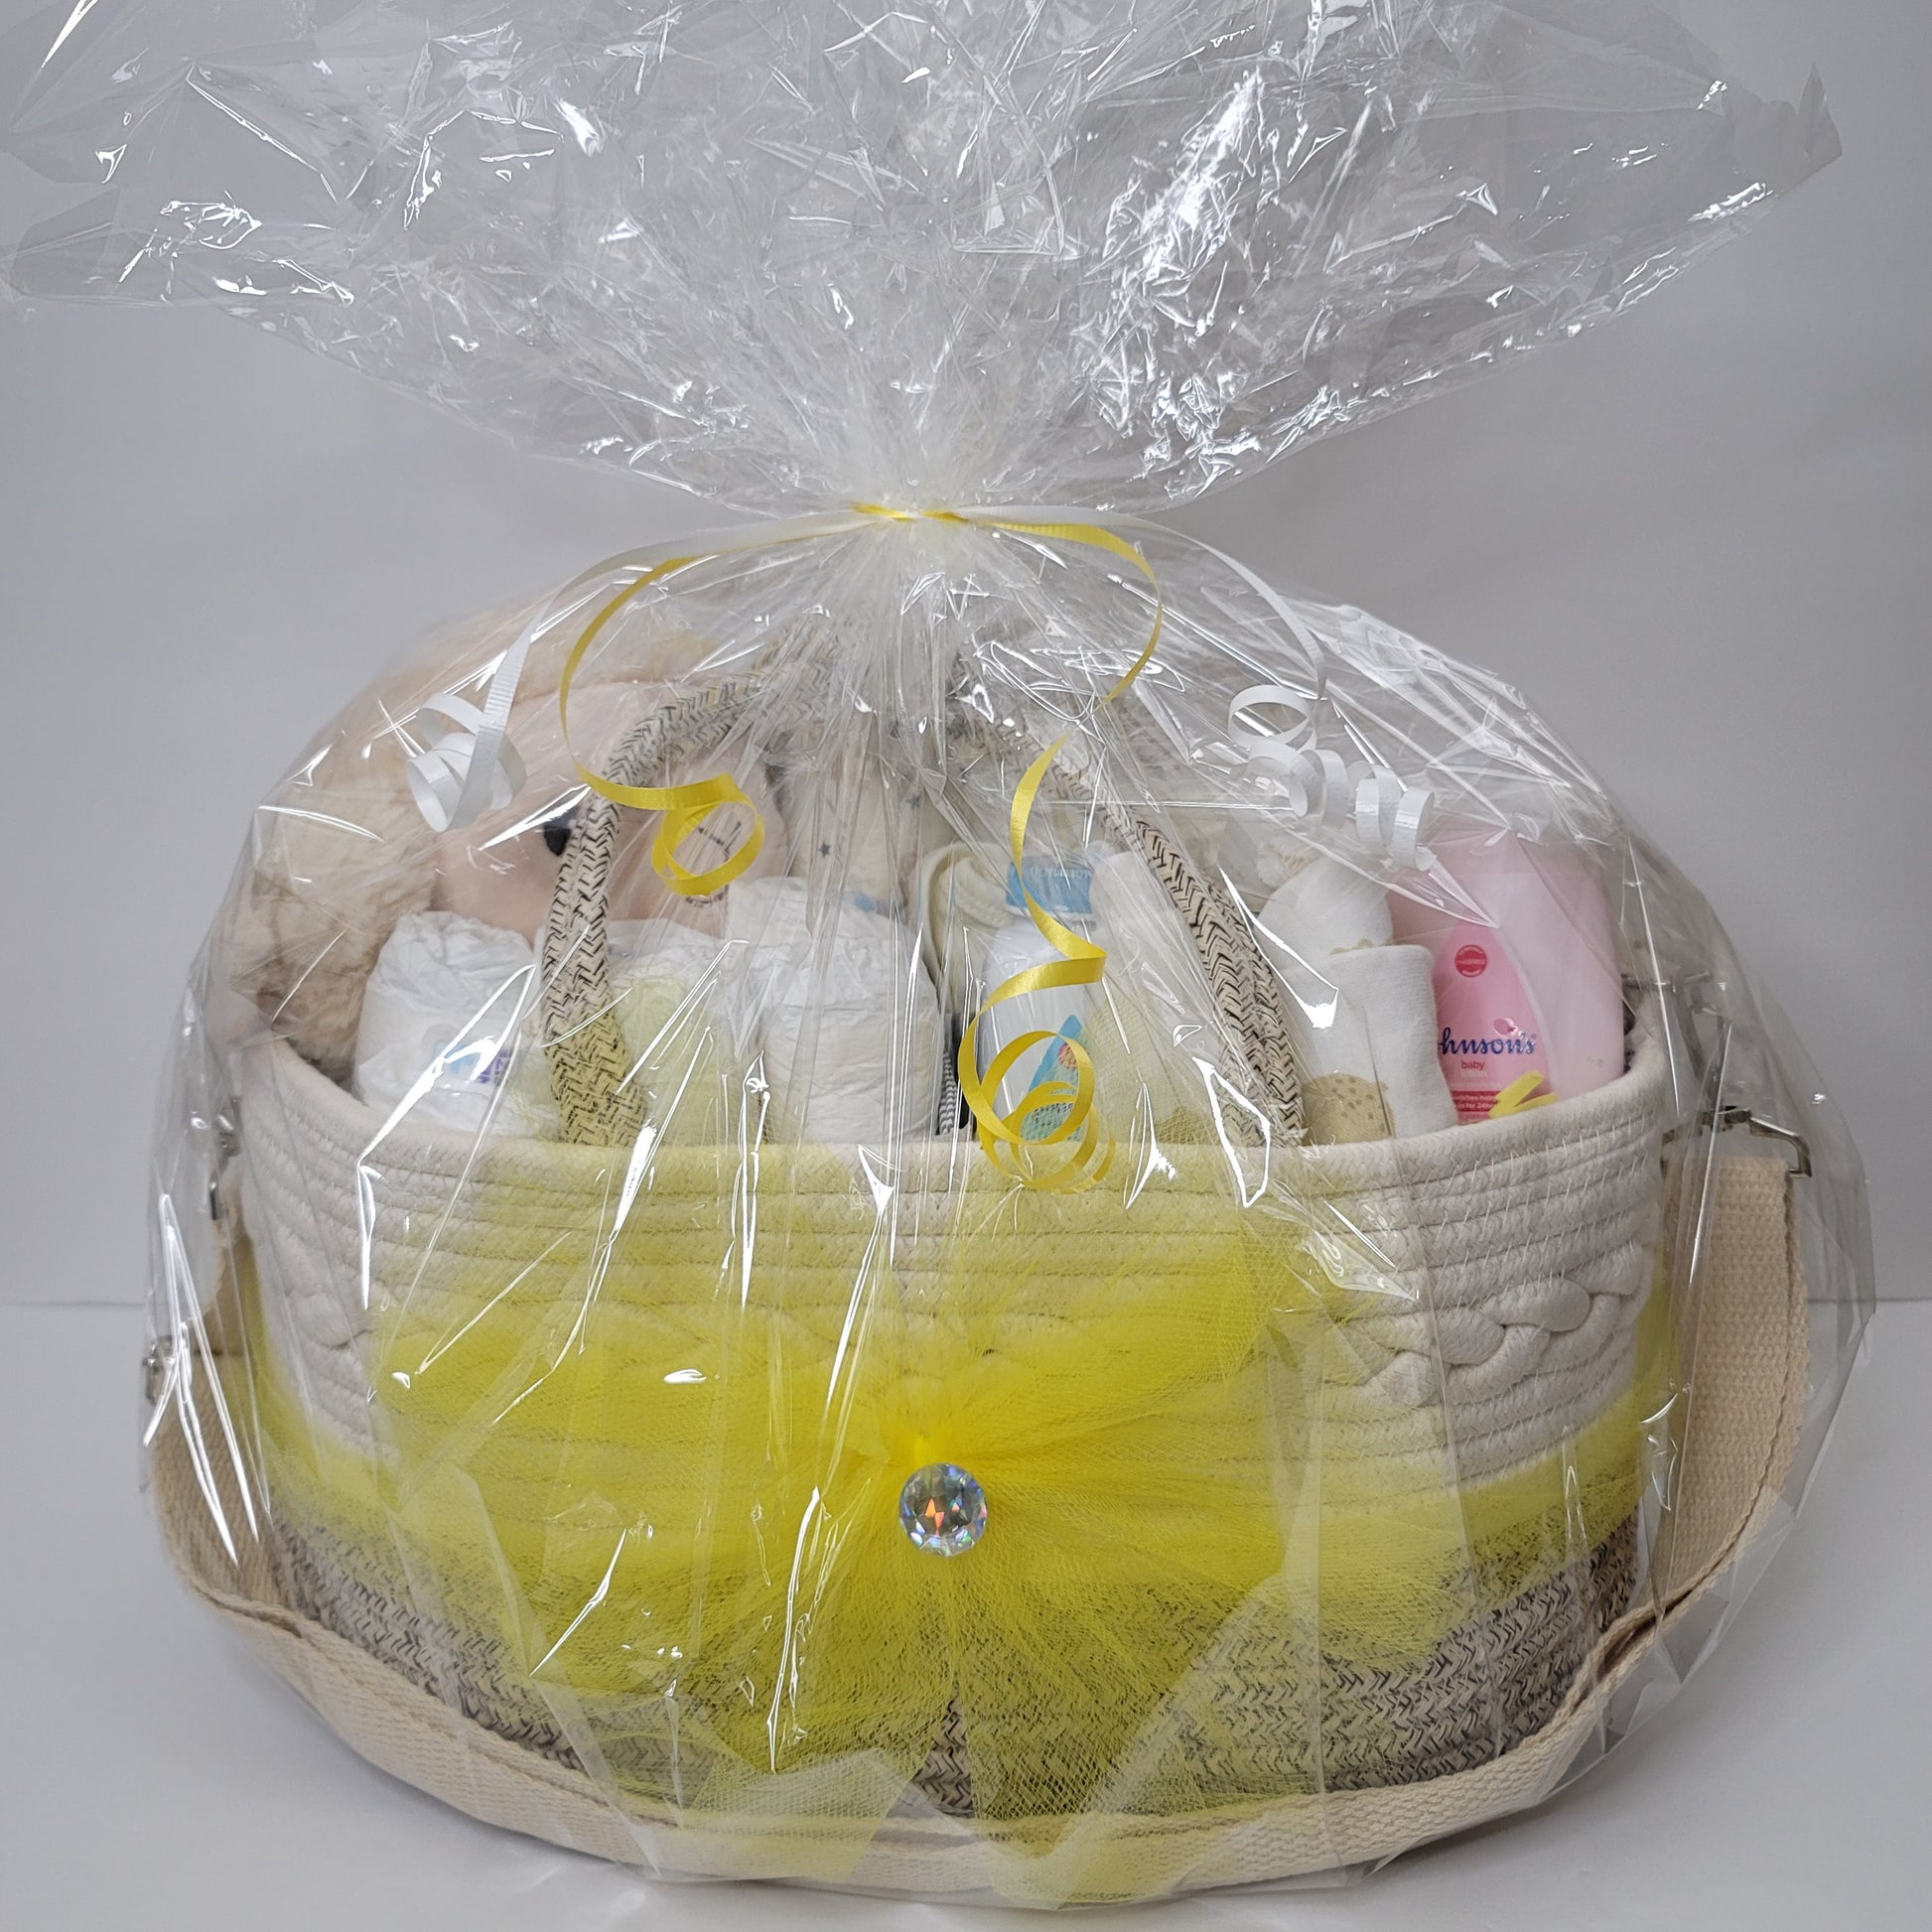 Diaper Caddy Organizer Gift Basket